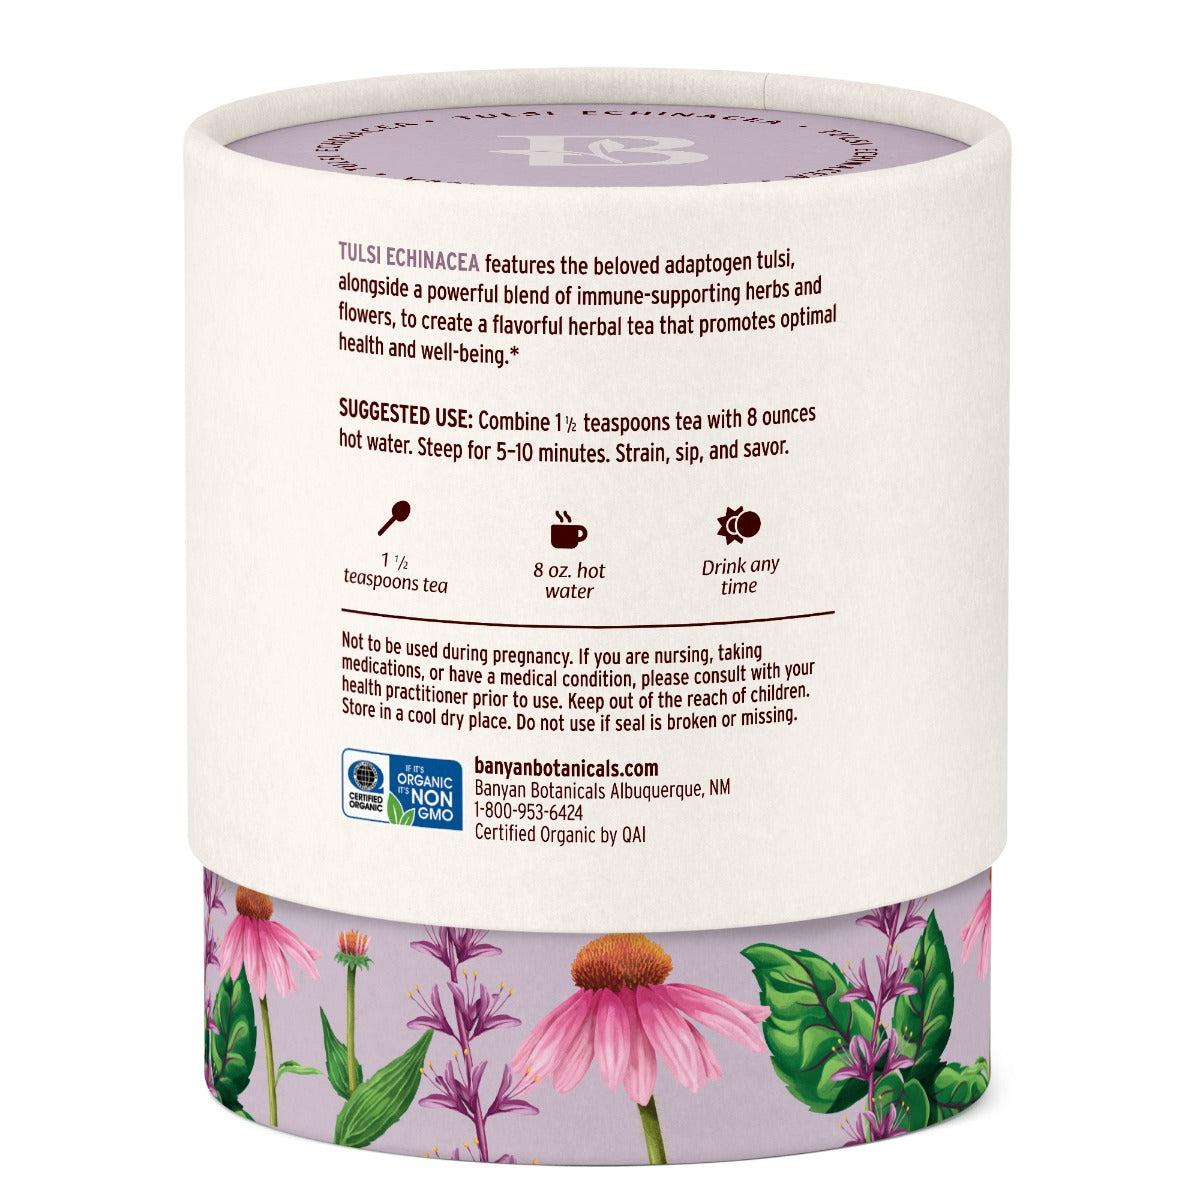 Tulsi Echinacea Immune Support Tea Suggested Use